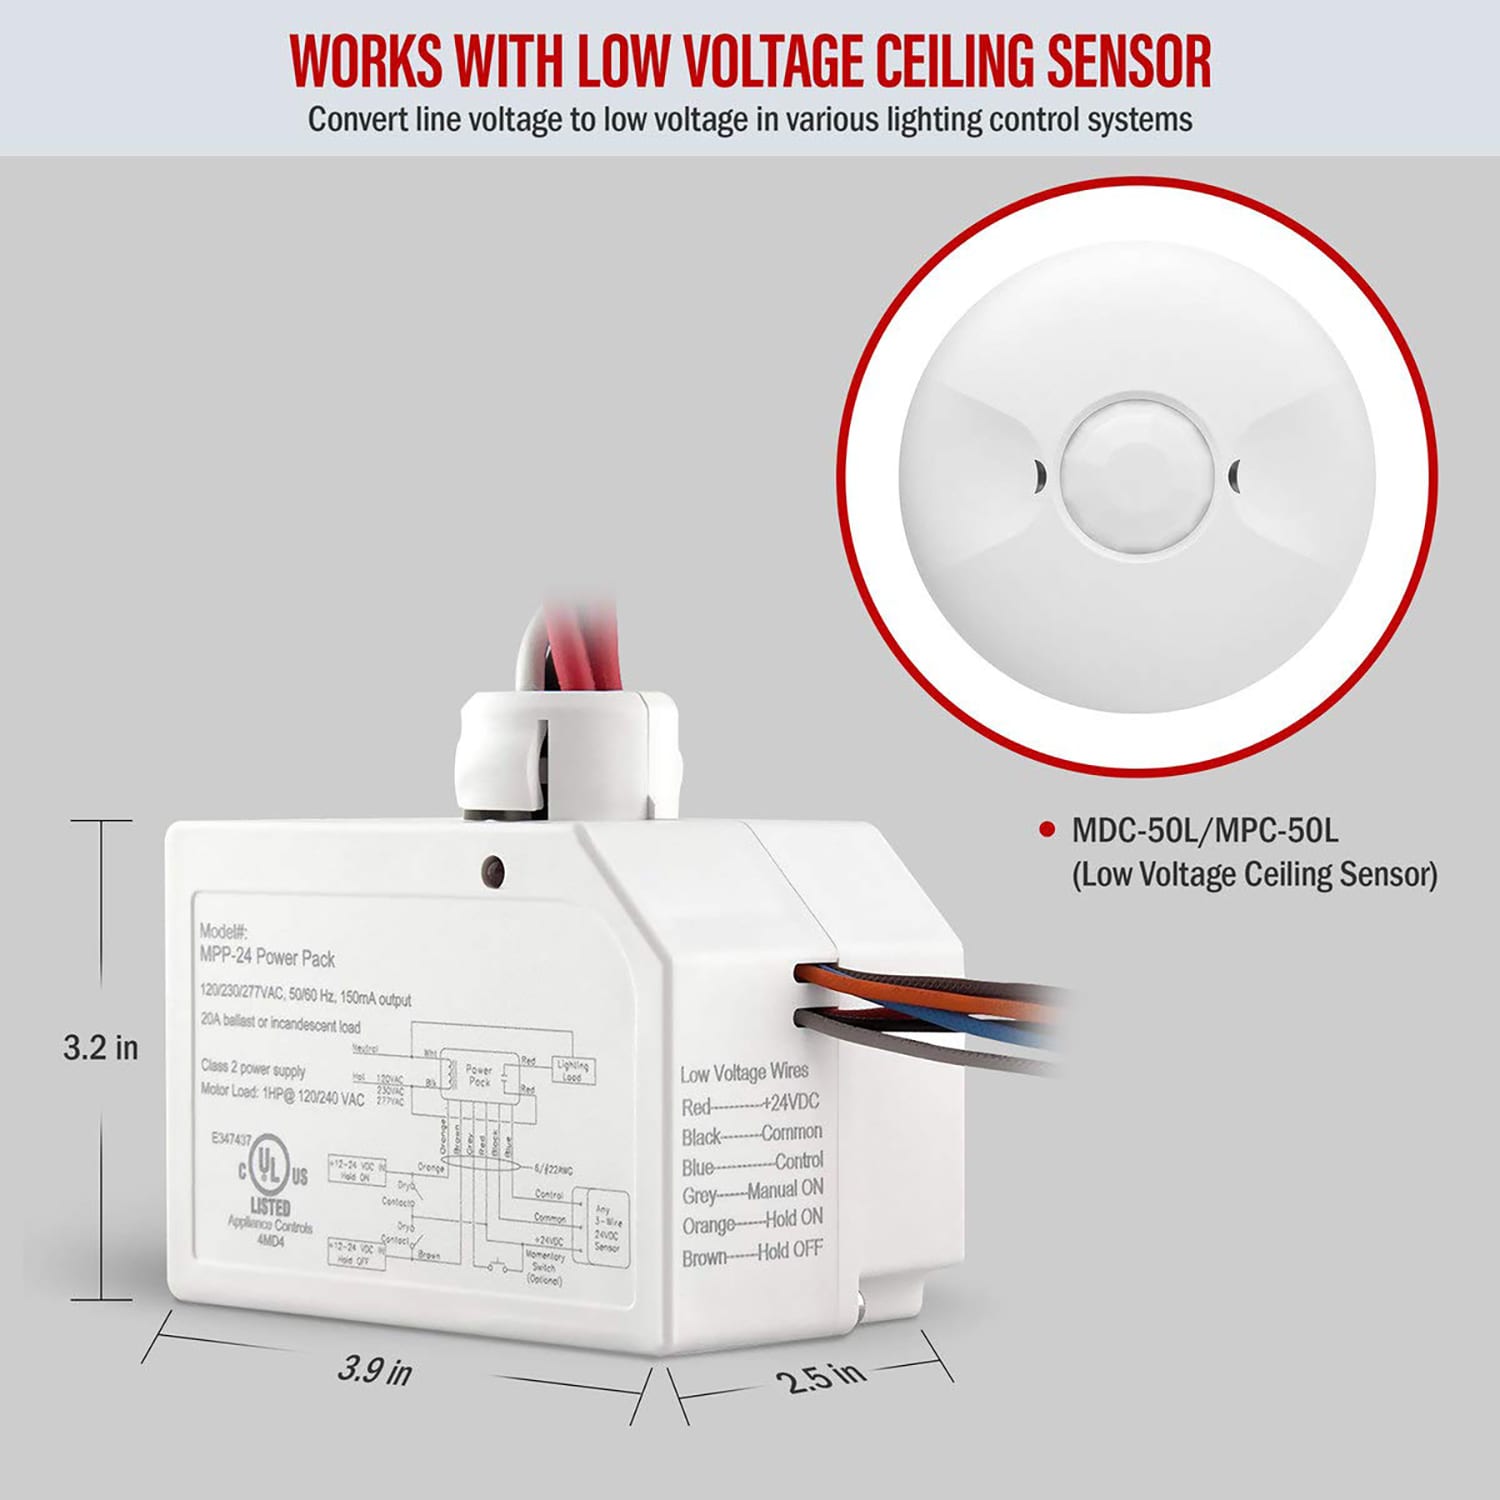 Low Voltage Ceiling Sensor Power Pack